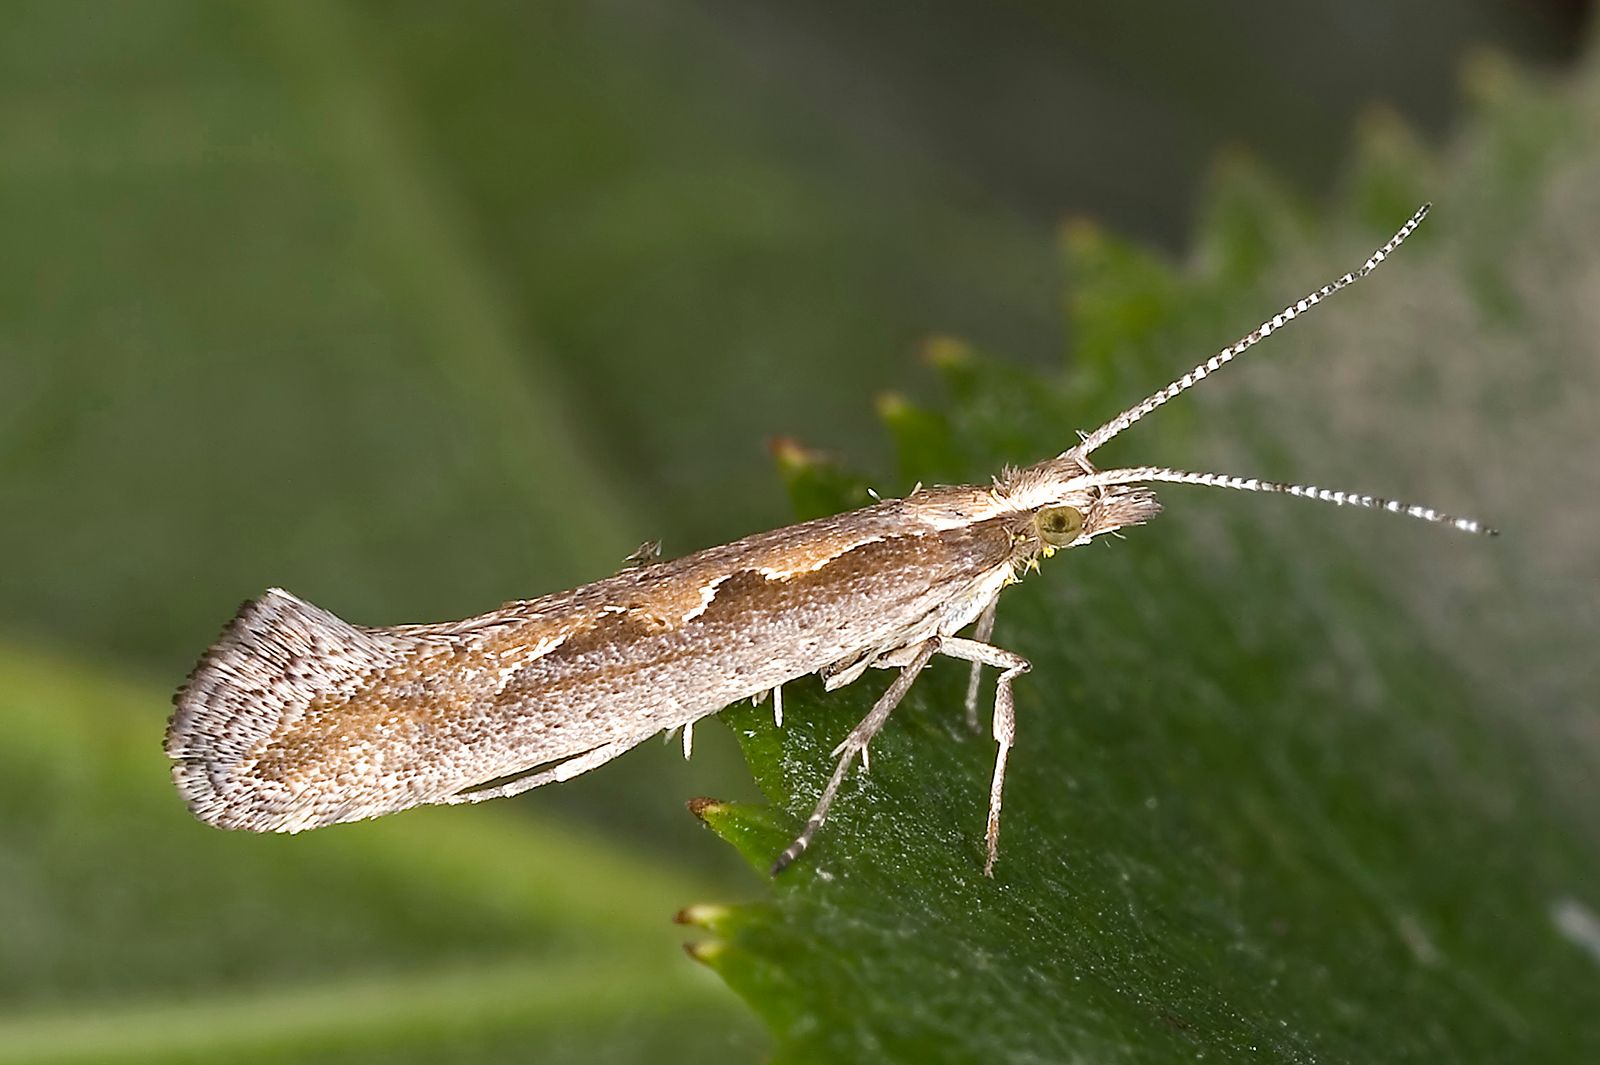 Diamondback moth | Pest Control, Crops & Agriculture | Britannica